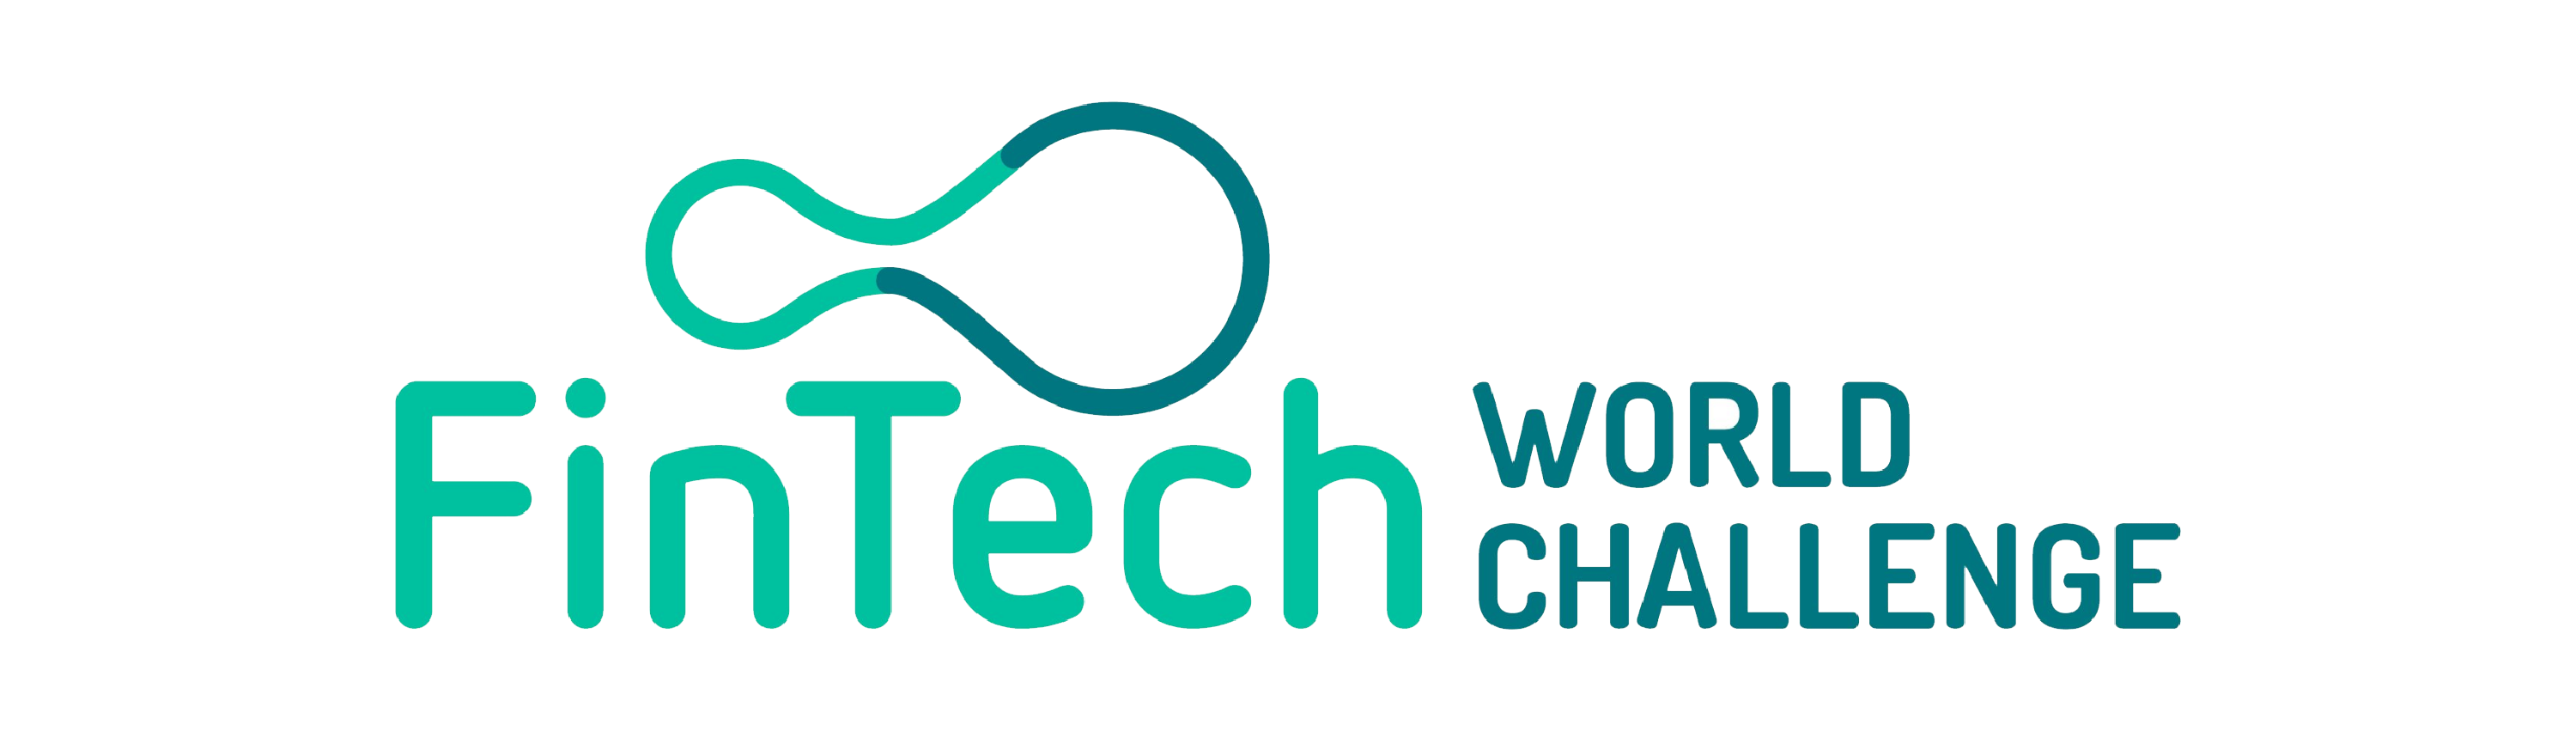 logos premios_Fintech World Challenge